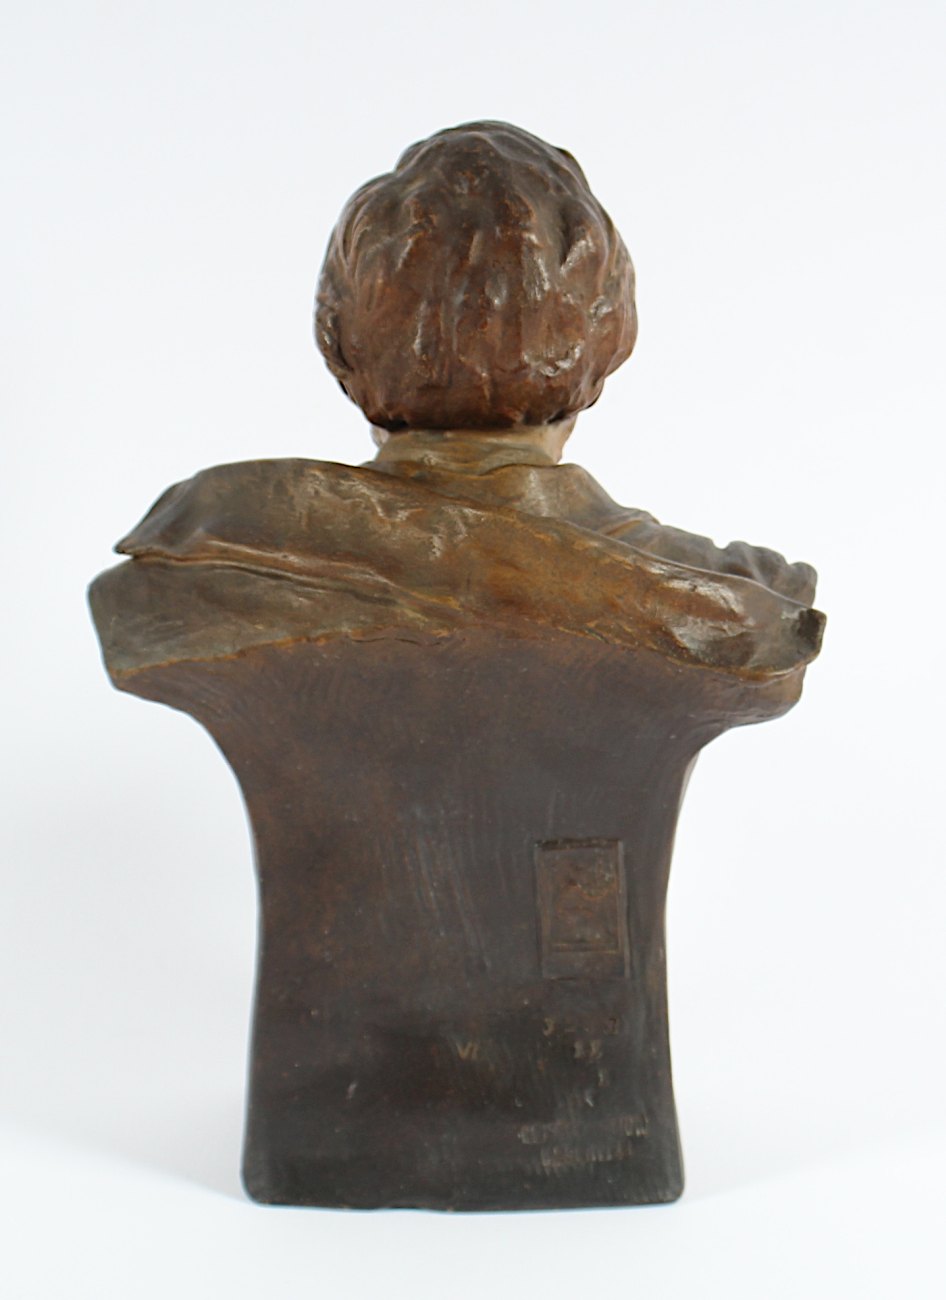 BÜSTE RICHARD WAGNER, Keramik, patiniert, H 31, bez. "Rosé", Entwurf Albert Dominique ROSÉ, - Image 3 of 5